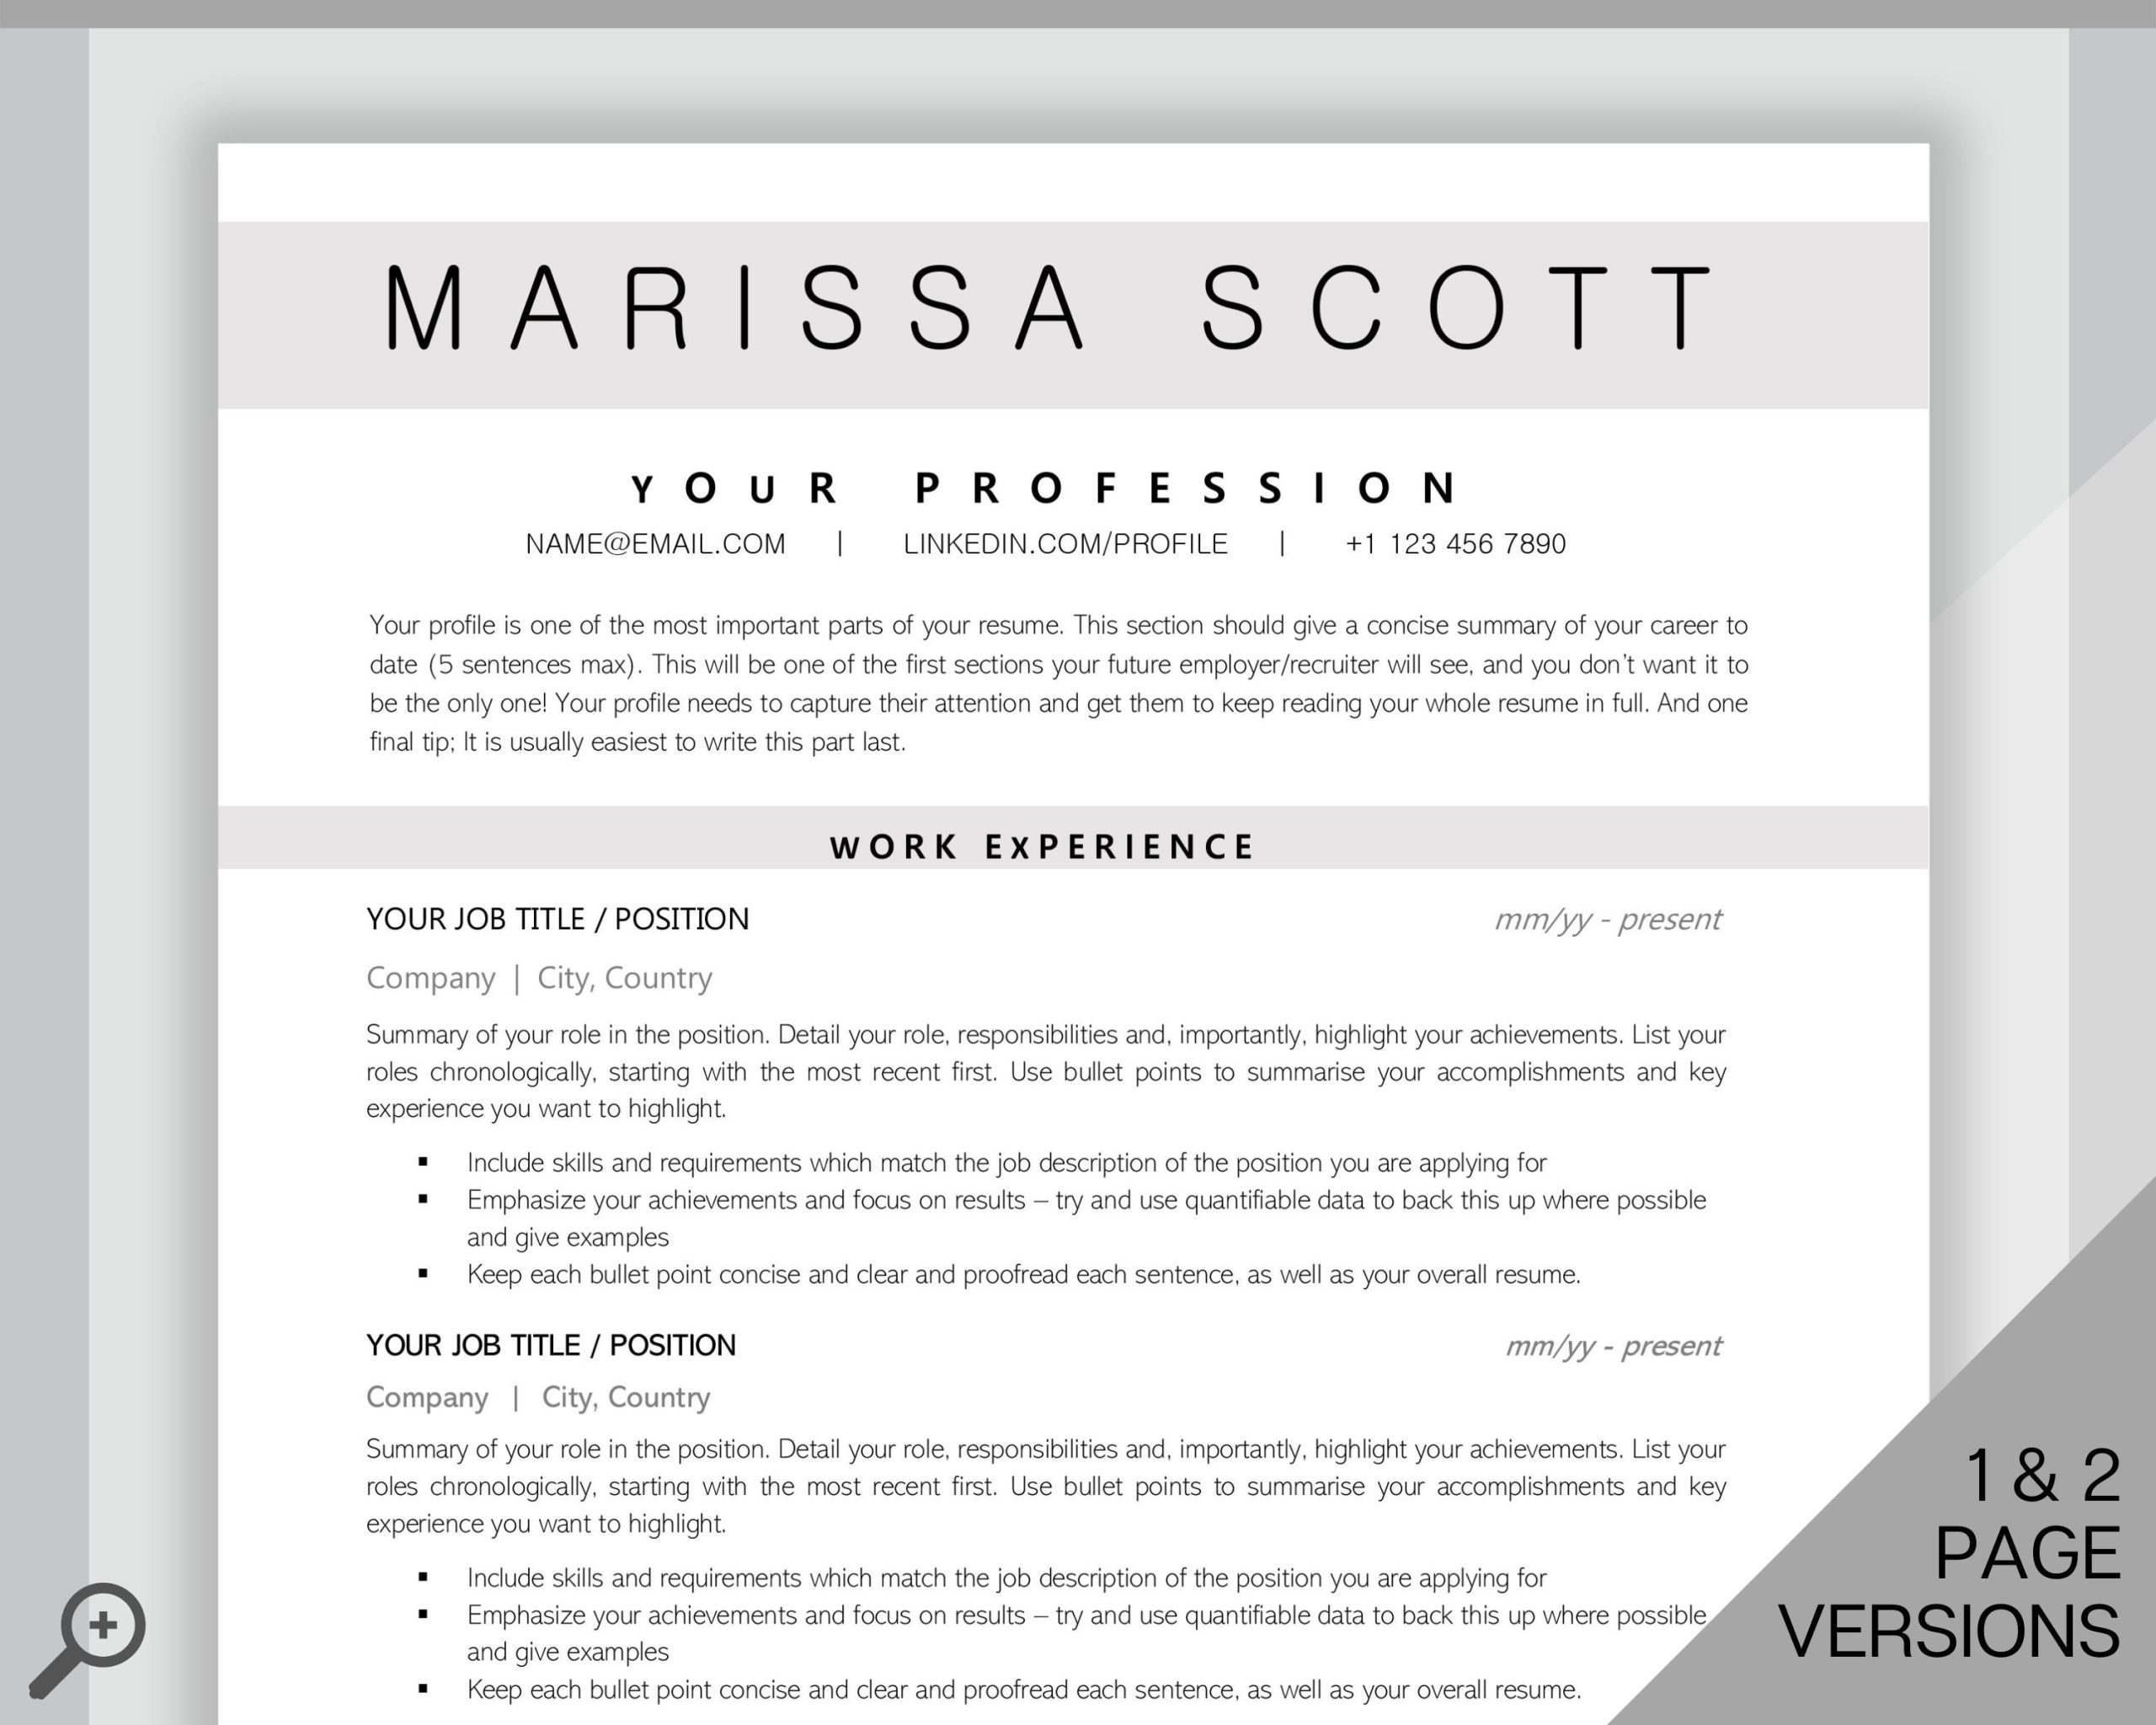 Back Page Of Resume Work Sample Professional Resume Template Word. Cv Template Professional – Etsy.de